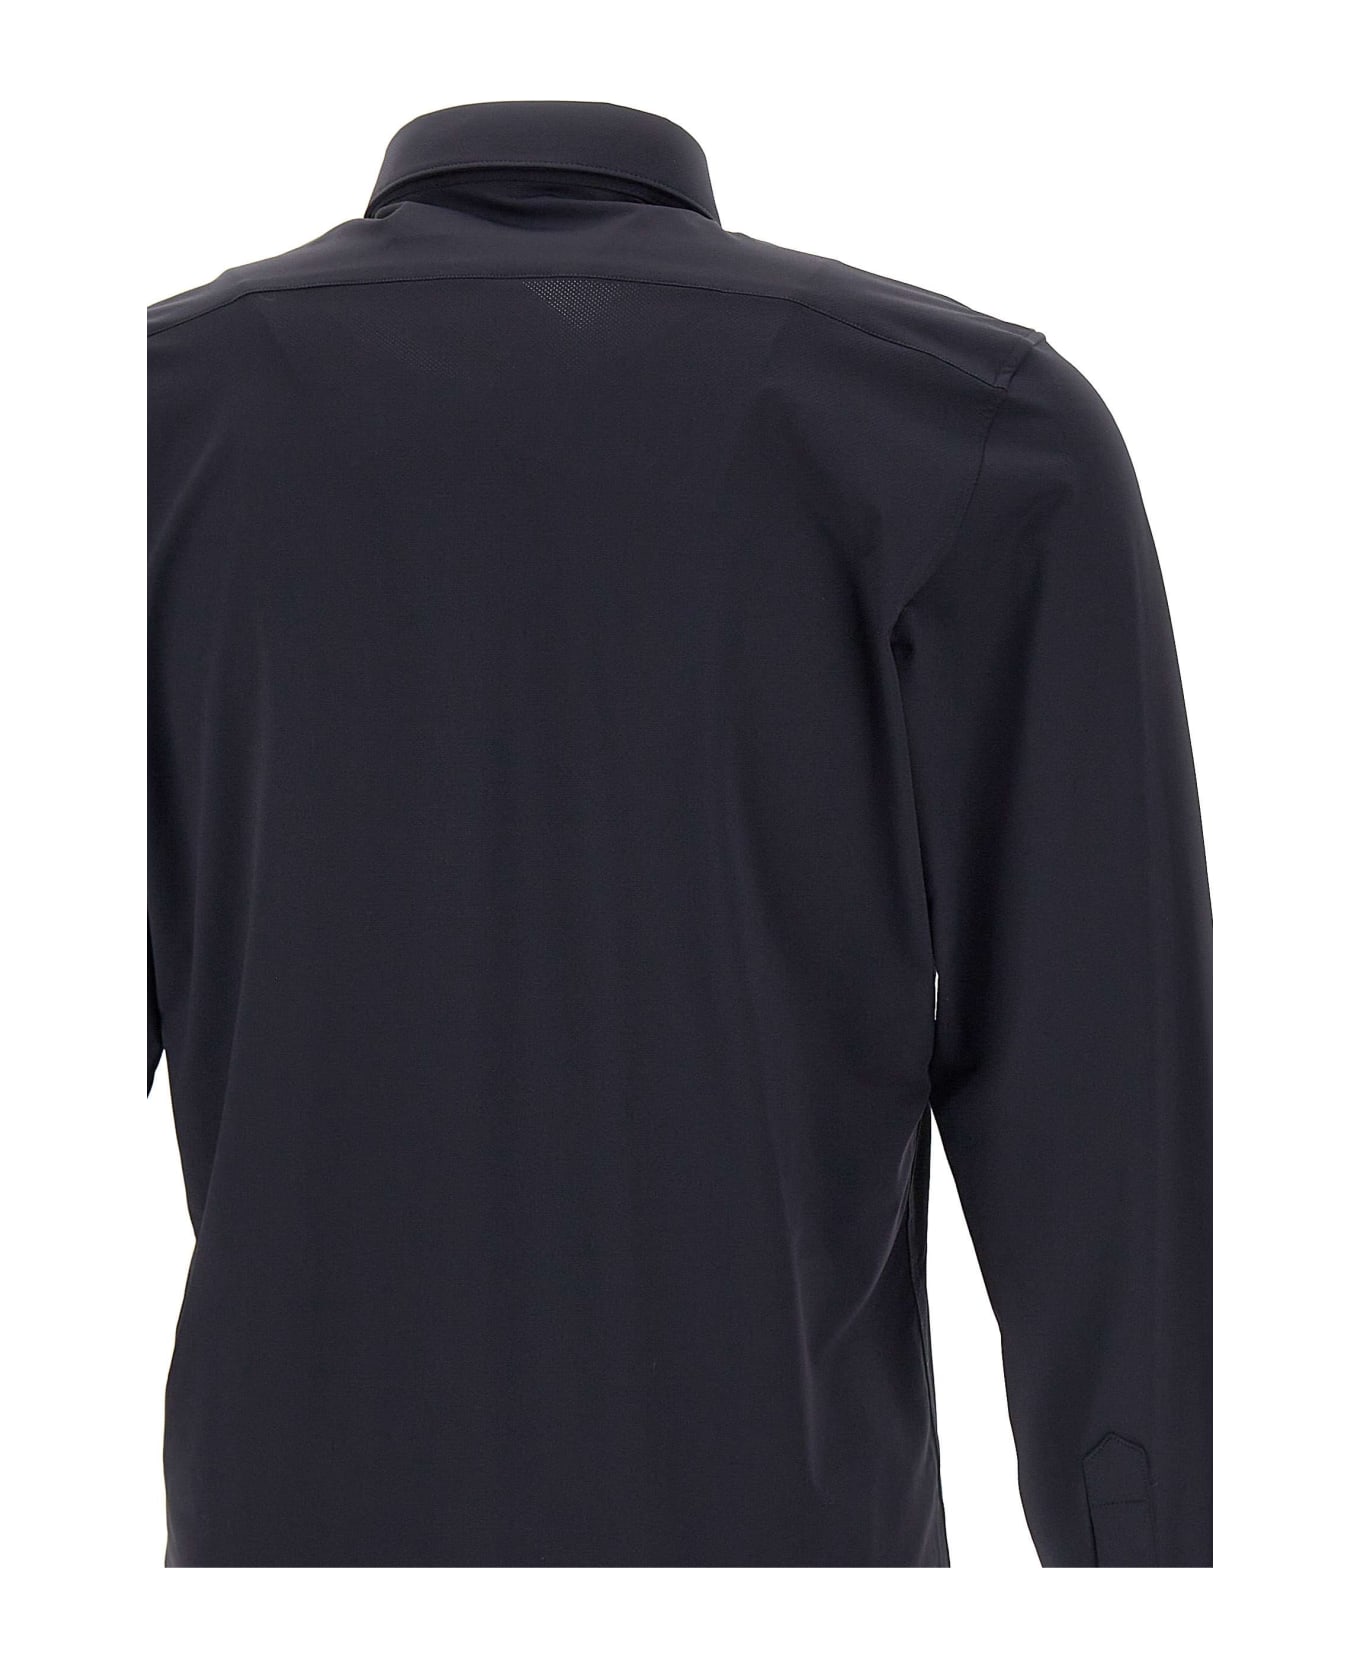 RRD - Roberto Ricci Design 'oxford Open' Shirt Shirt - BLUE BLACK